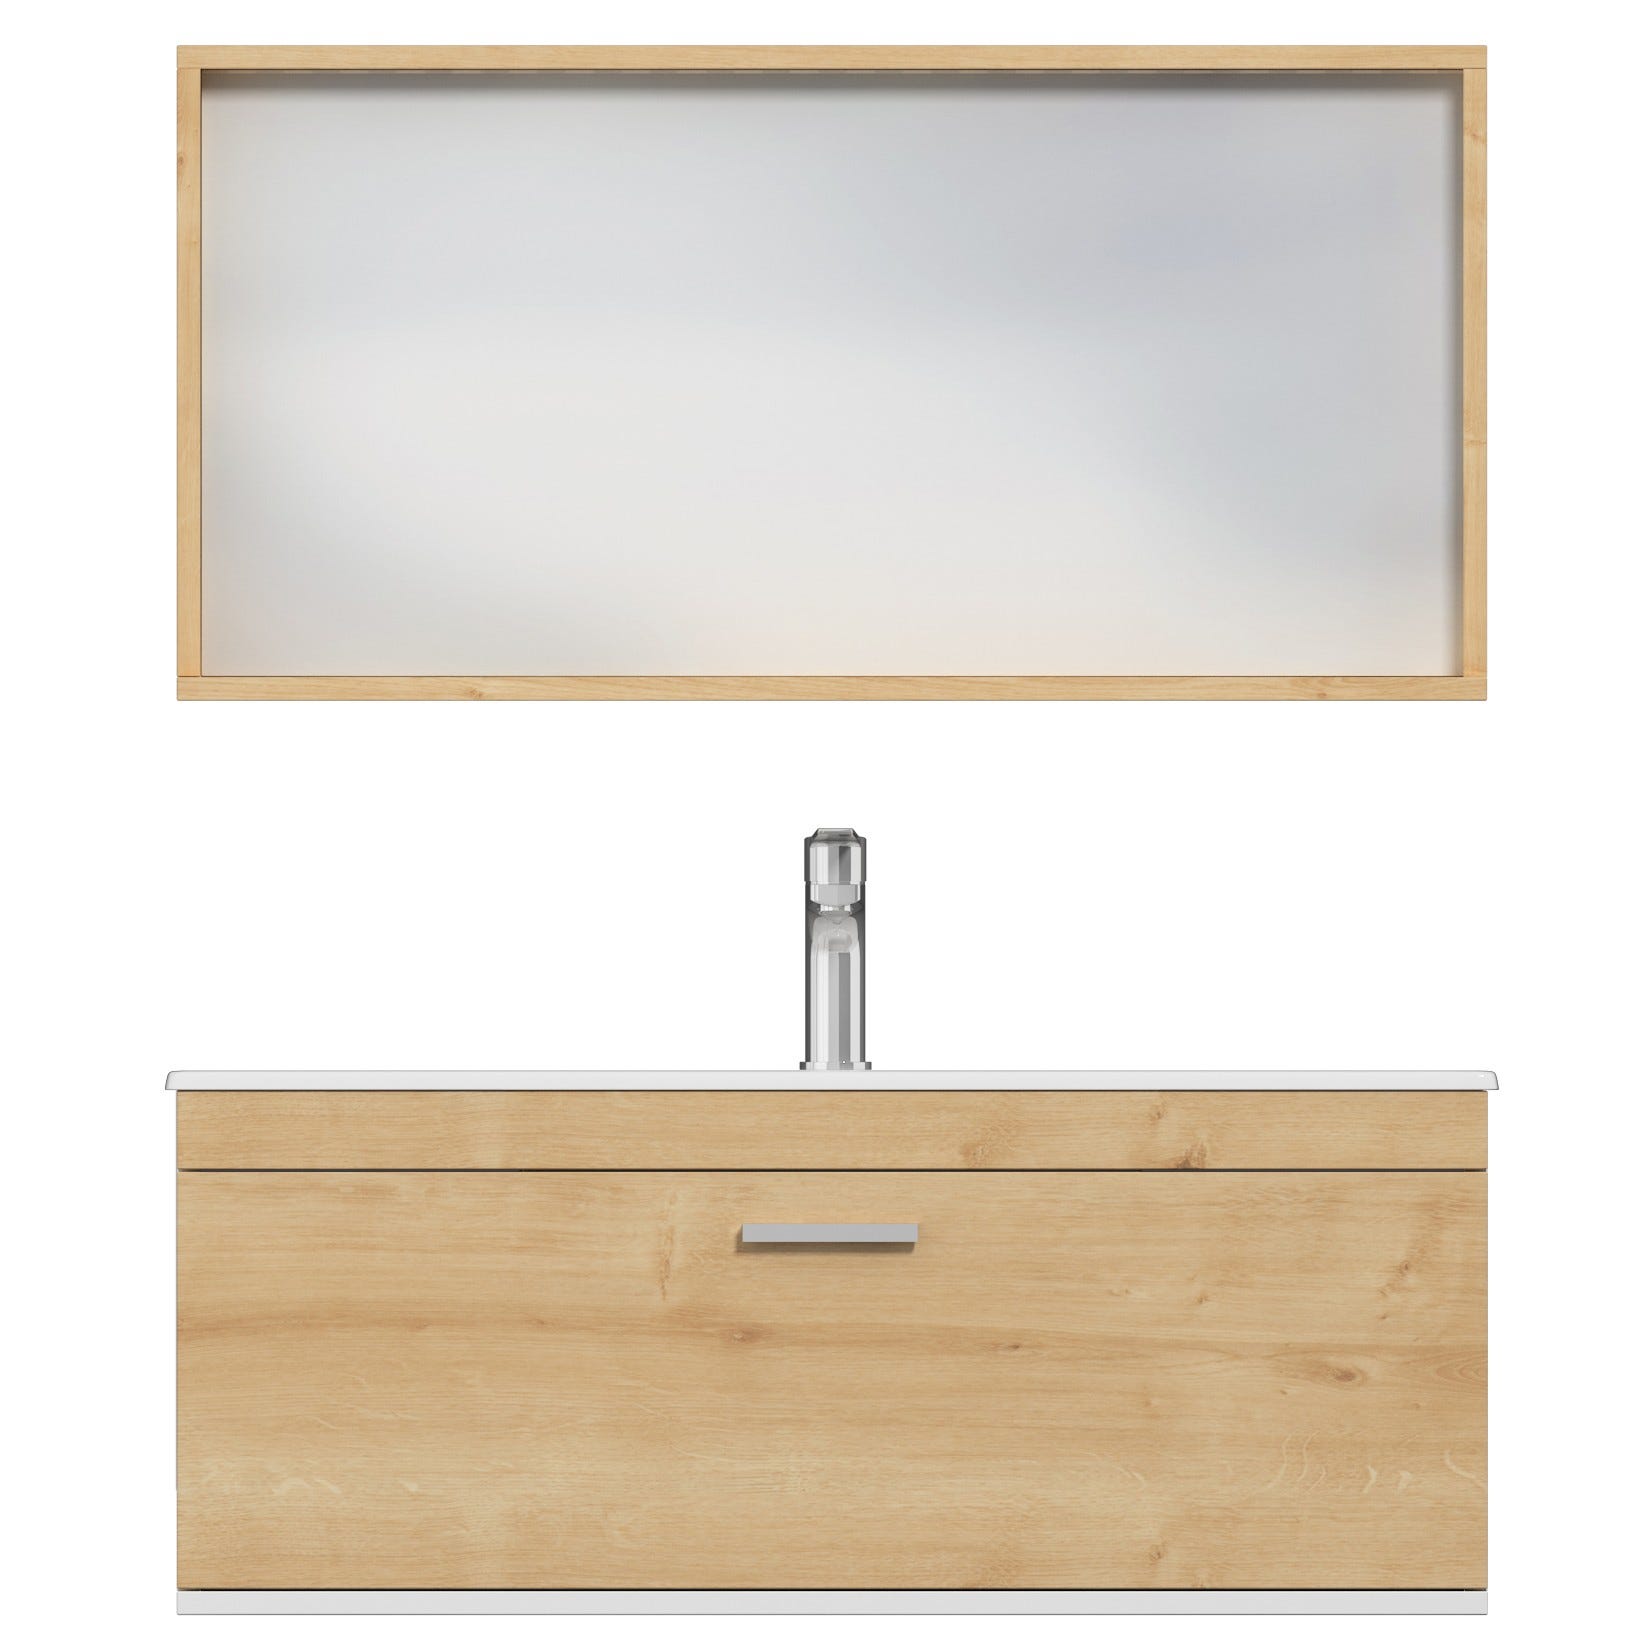 RUBITE Meuble salle de bain simple vasque 1 tiroir chêne clair largeur 100 cm + miroir cadre 4